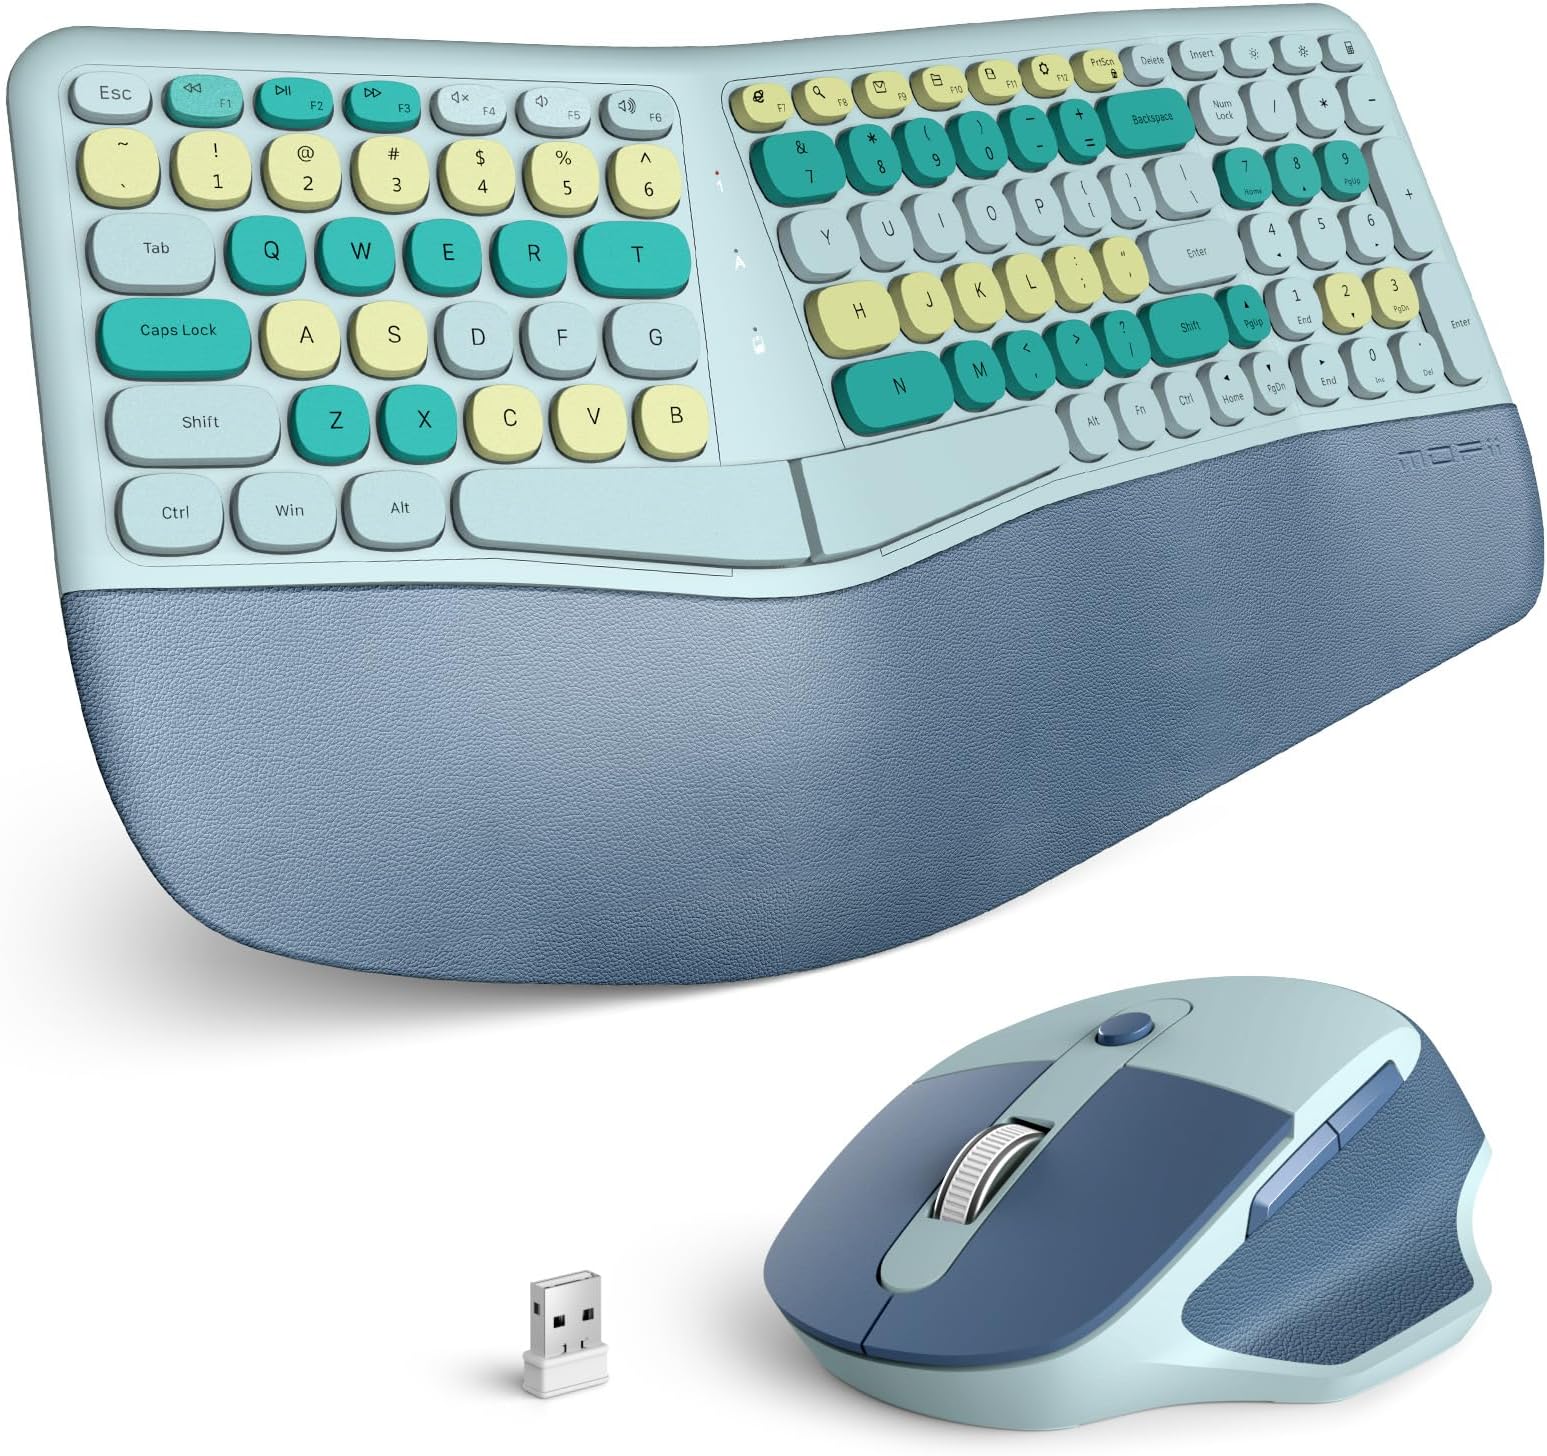 Ergonomic Wireless Keyboard and Mouse - Blue